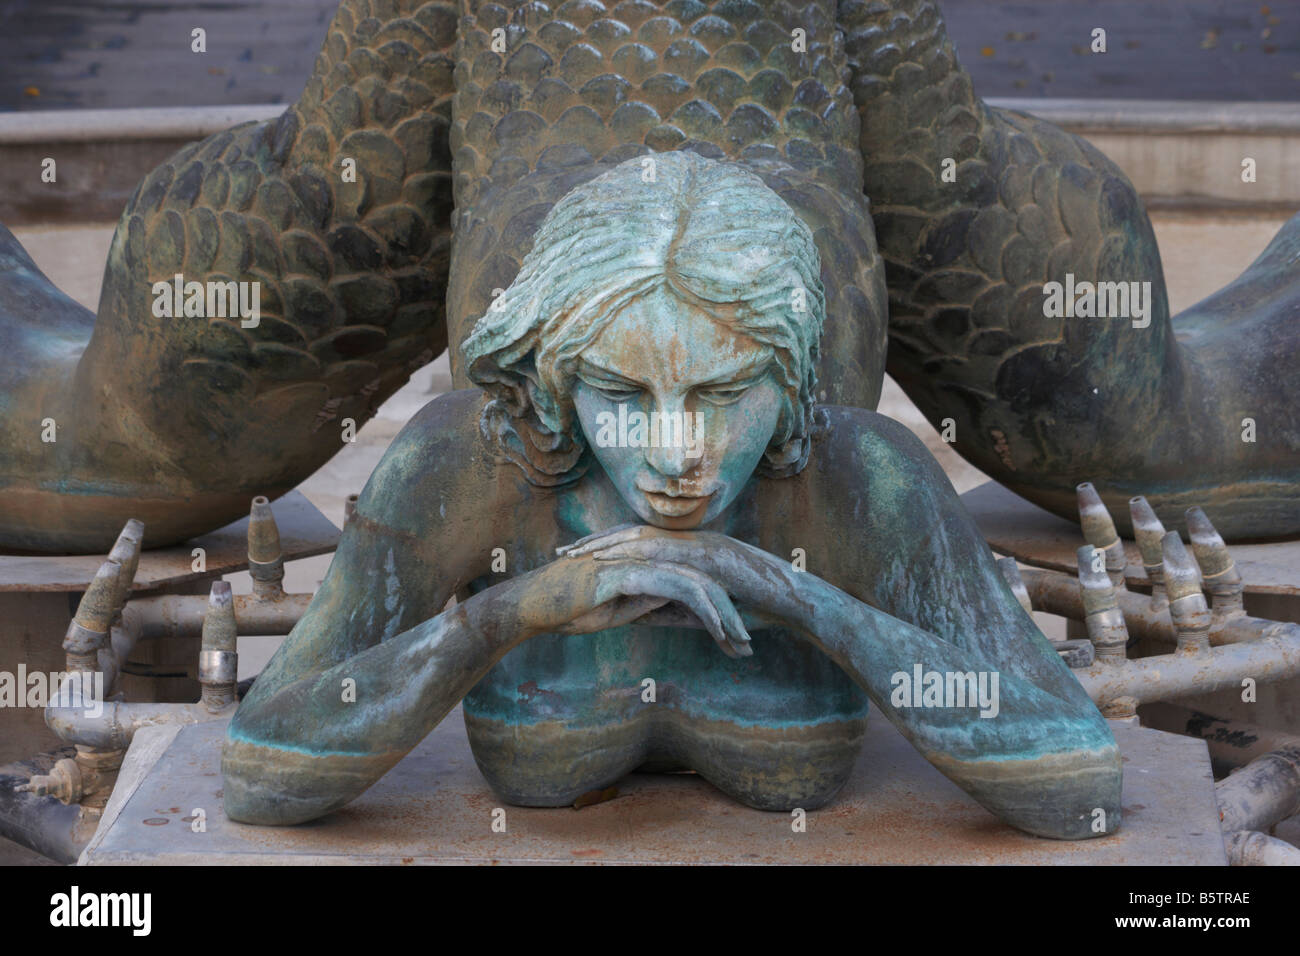 Mermaids in dry fountain in Spain Stock Photo